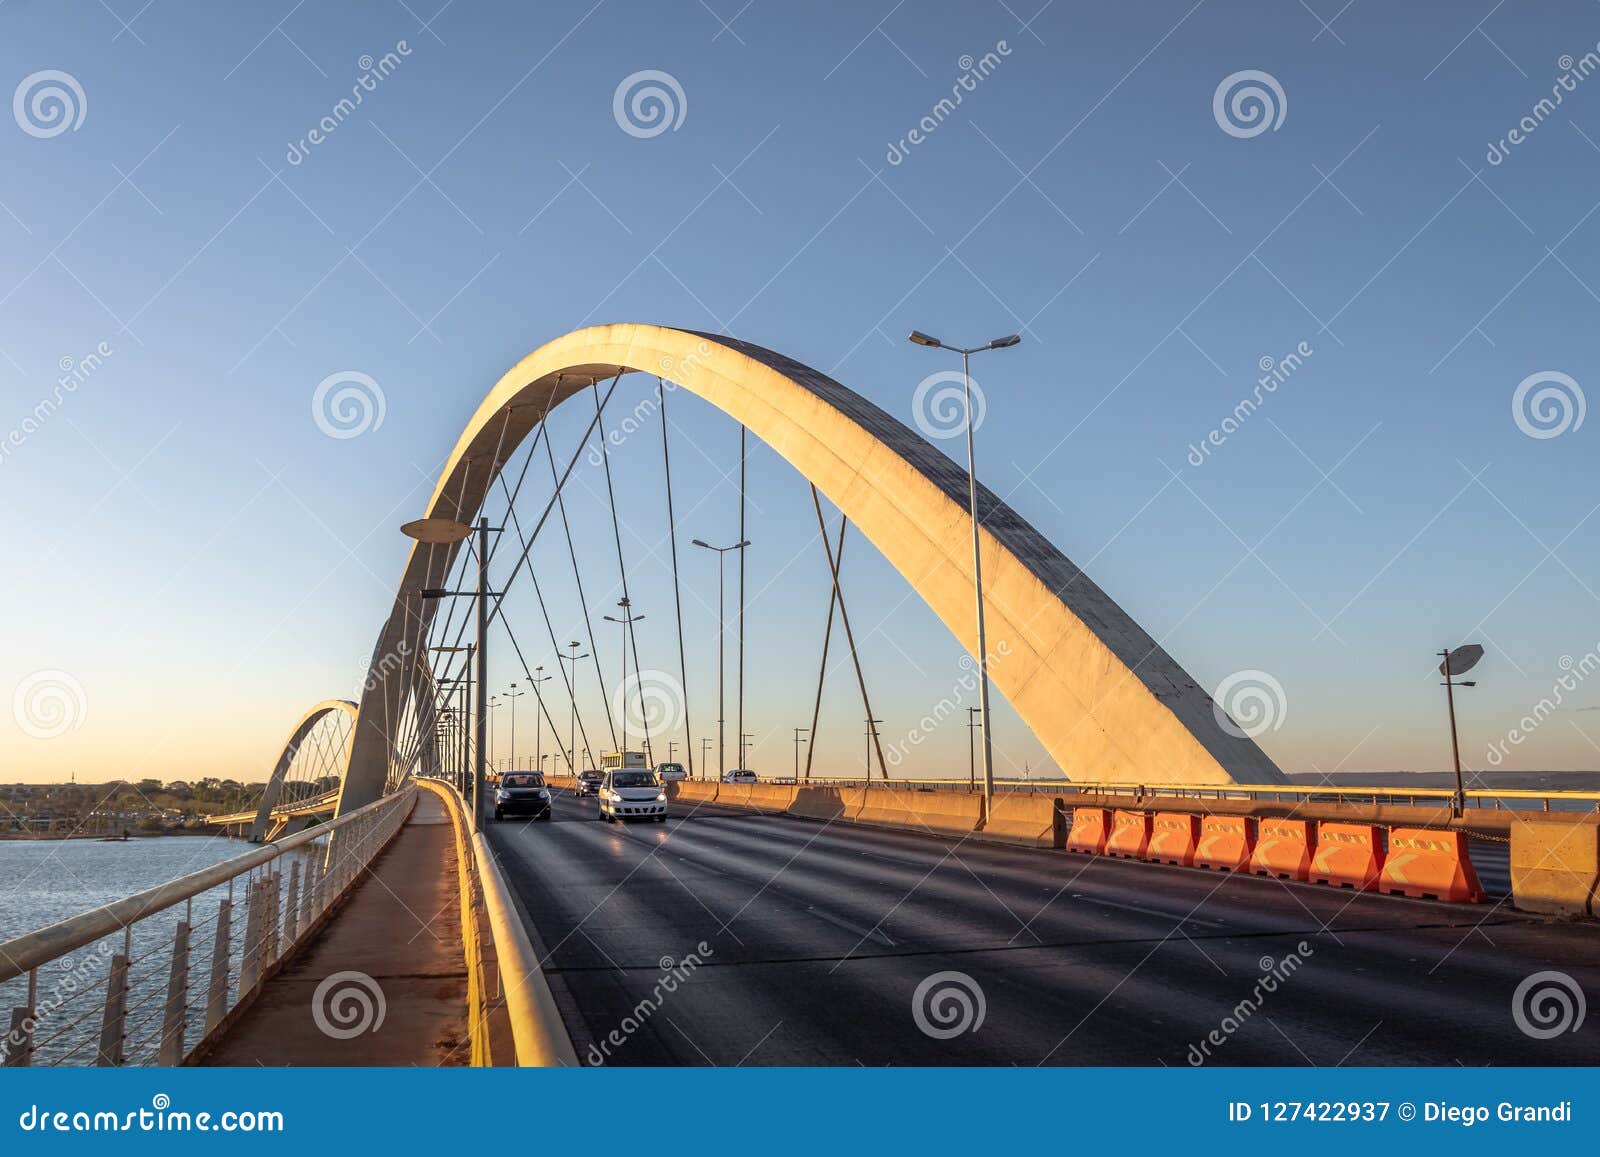 jk bridge - brasilia, distrito federal, brazil